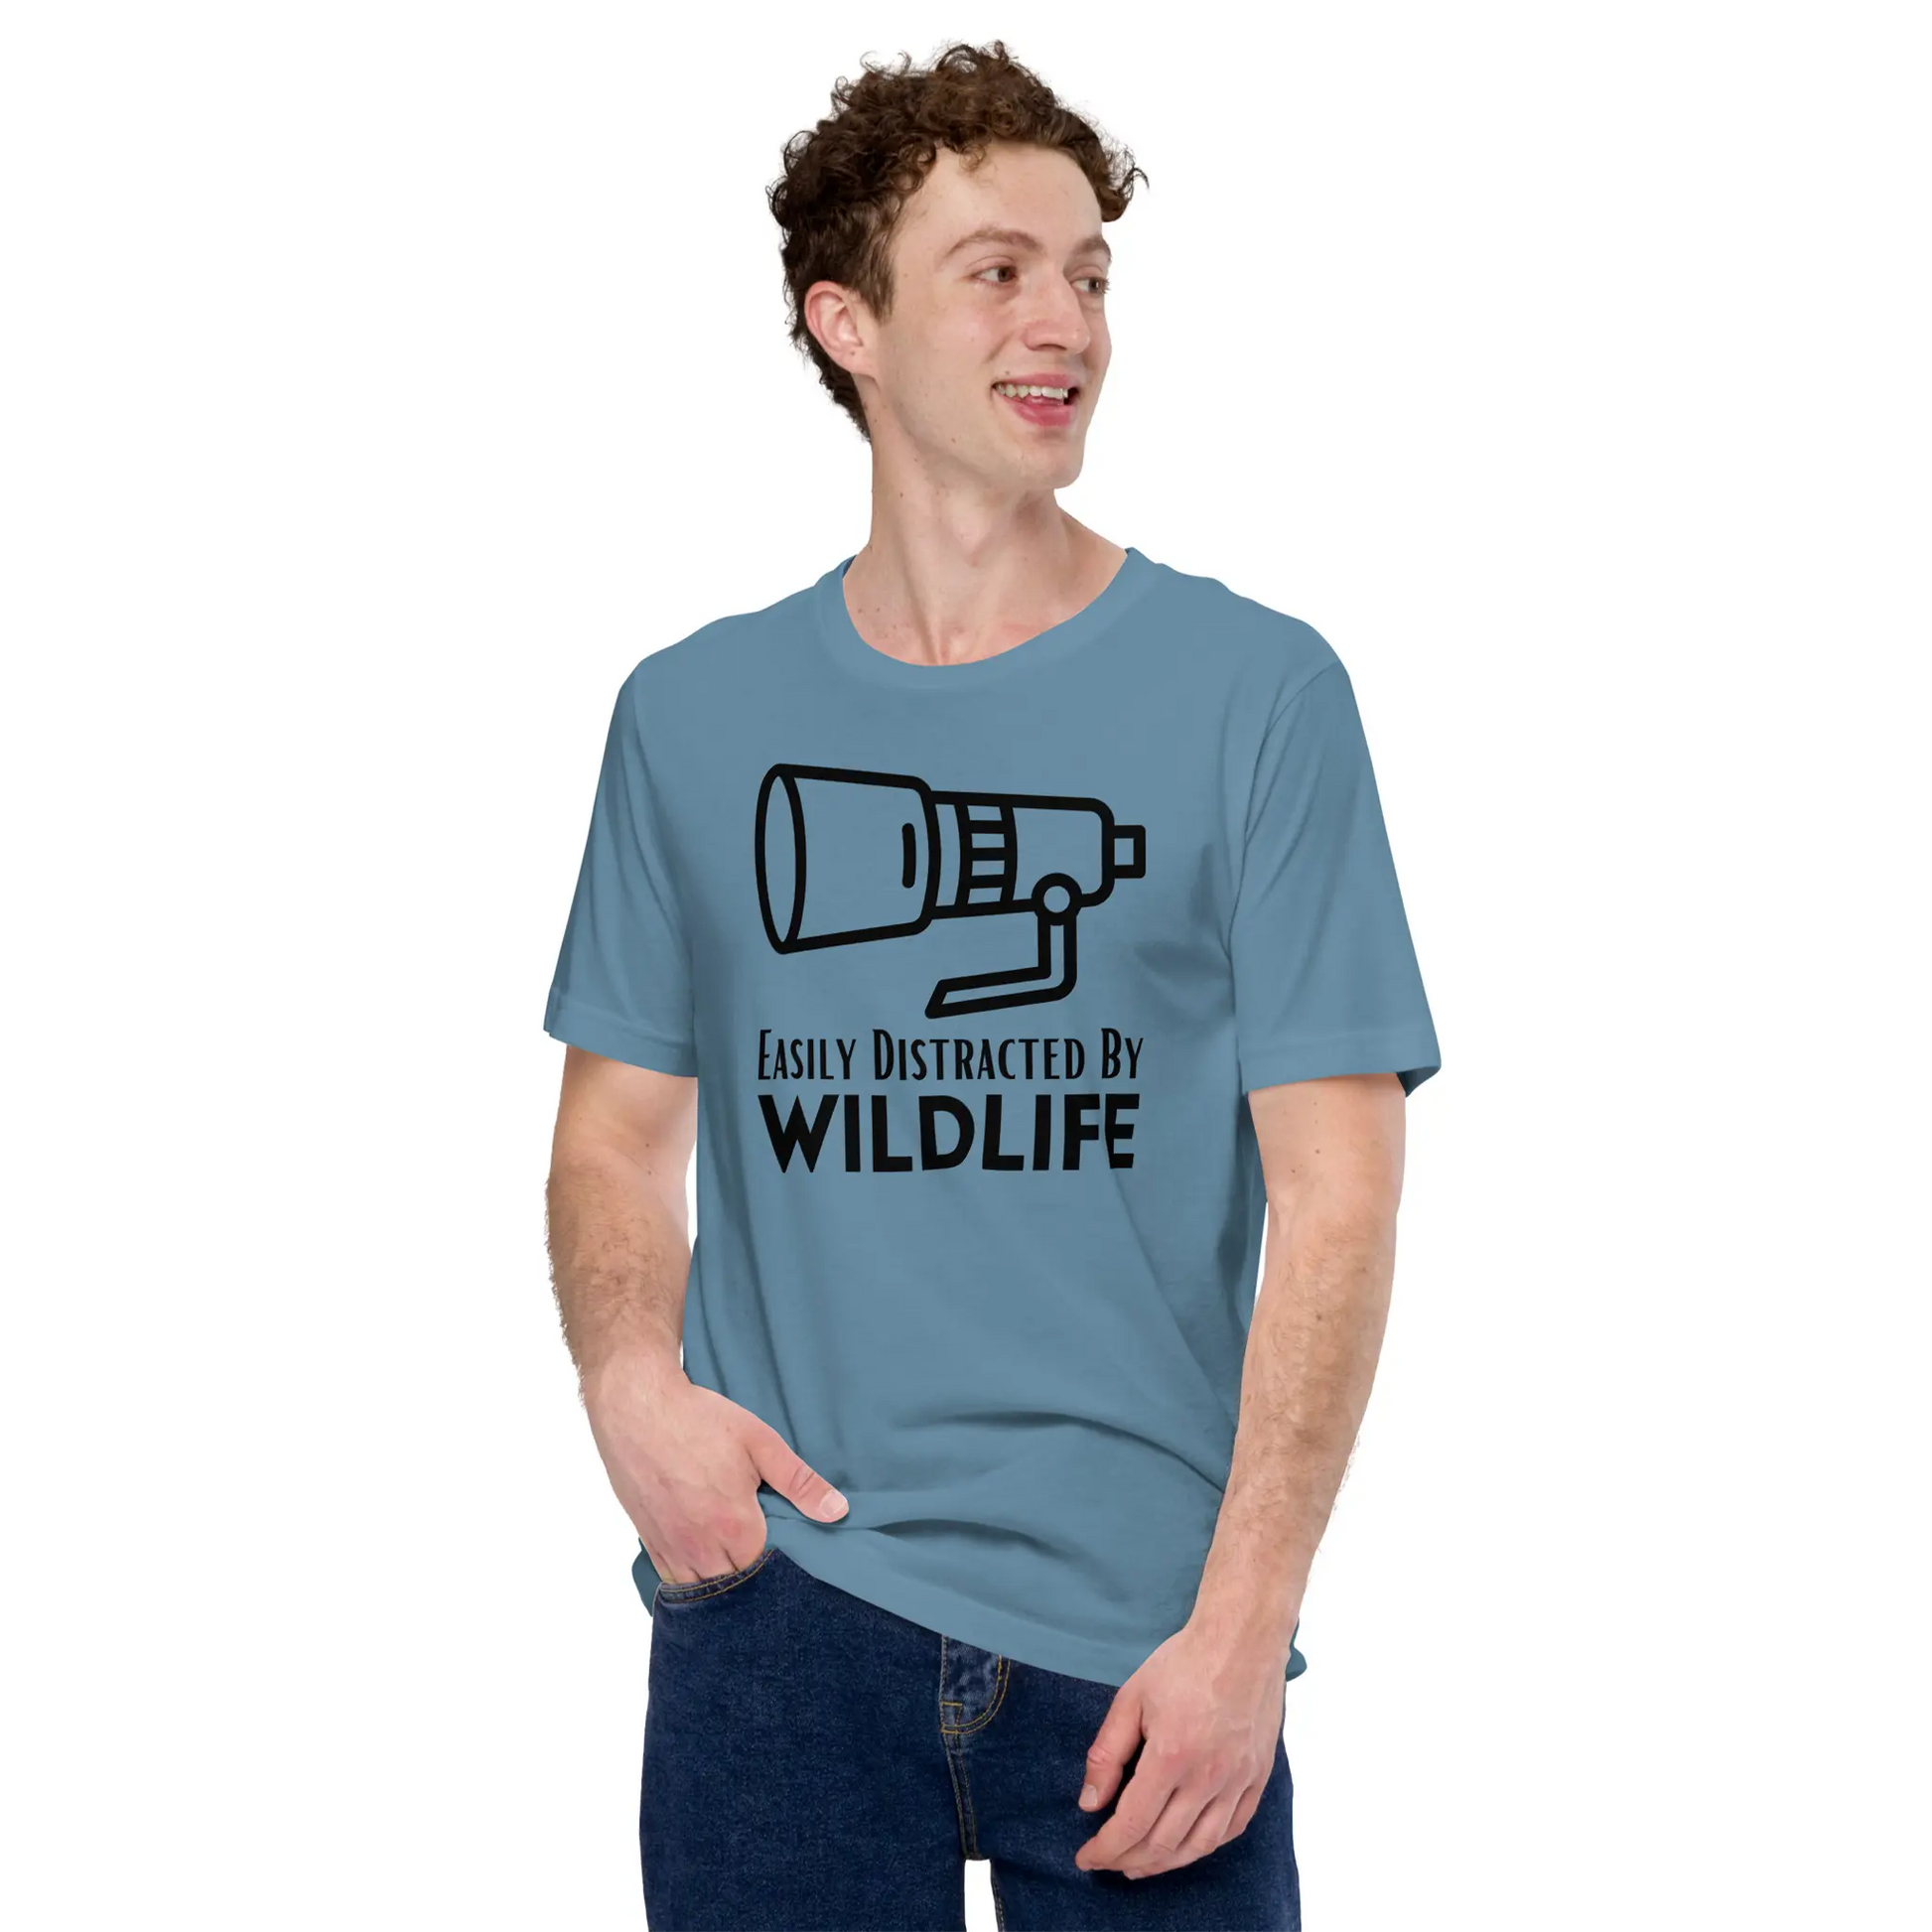 Man wearing blue wildlife photography T-shirt.